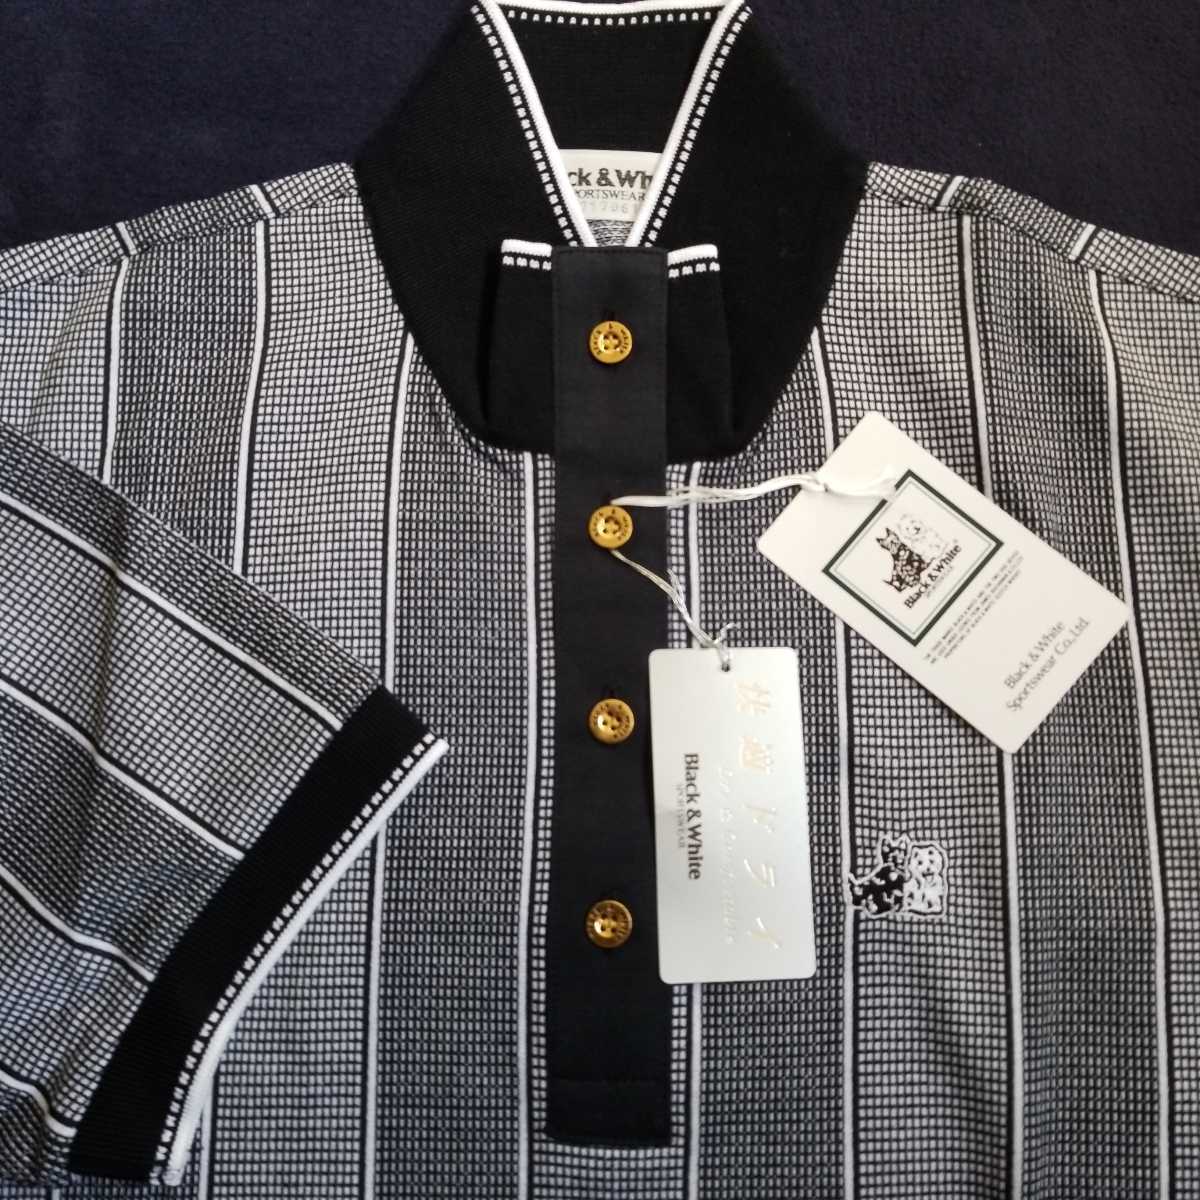 Black&Whiteブラック&ホワイト/レディース半袖ハイネックポロシャツ/ブラックMサイズ/定価￥20900(19000+税)/快適ドライ(吸汗速乾)日本製